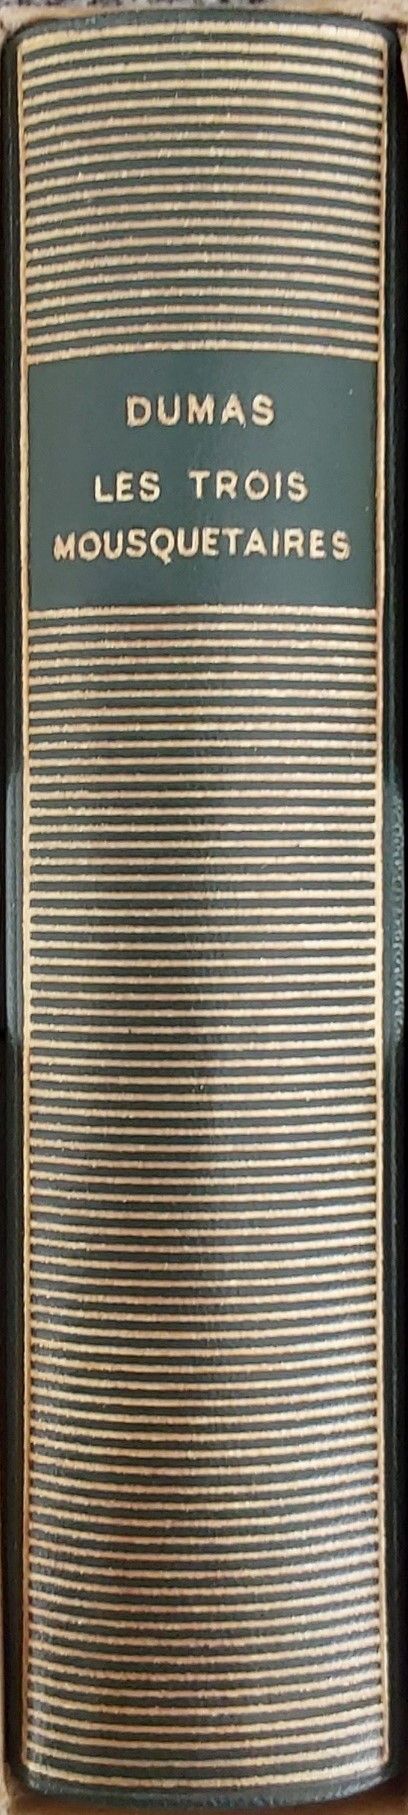 Volume 159 d'Alexandre Dumas dans la Bibliothèque de la Pléiade.